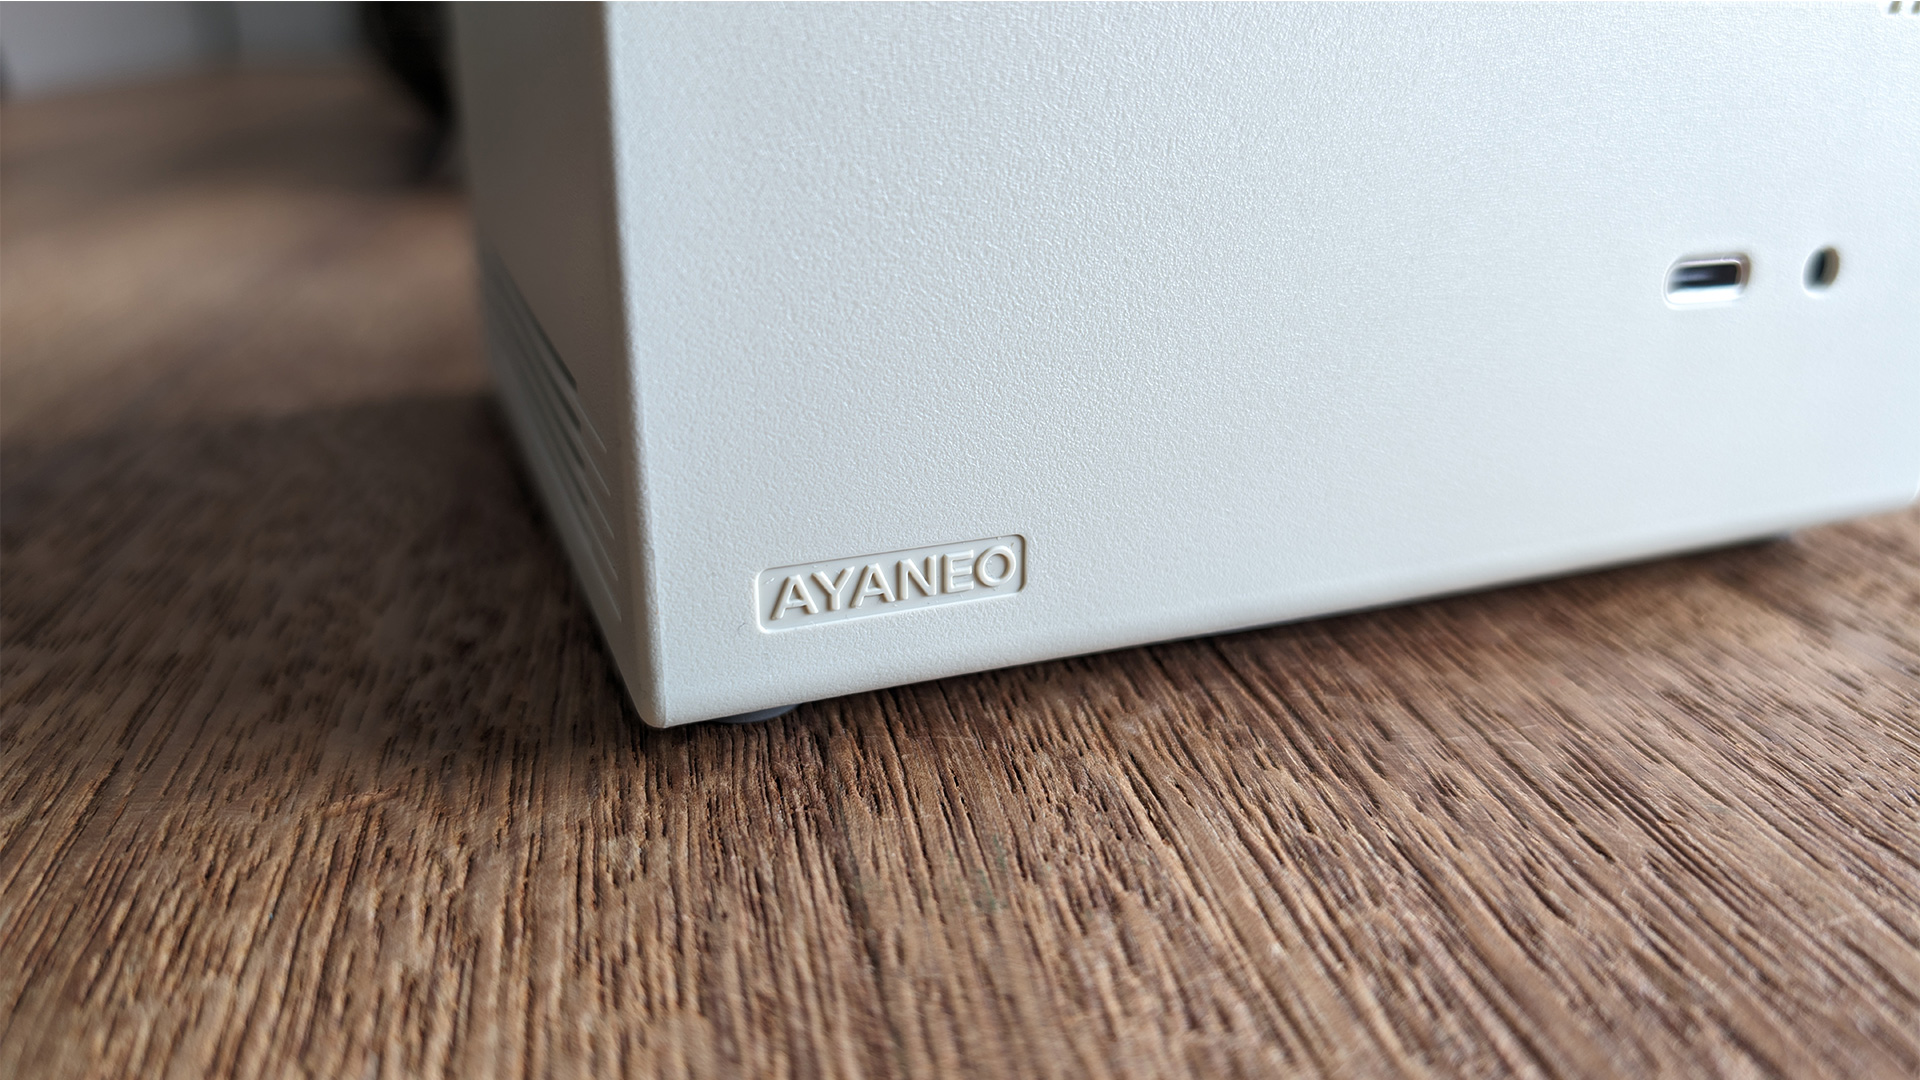 AYANEO Retro Mini PC AM01 review